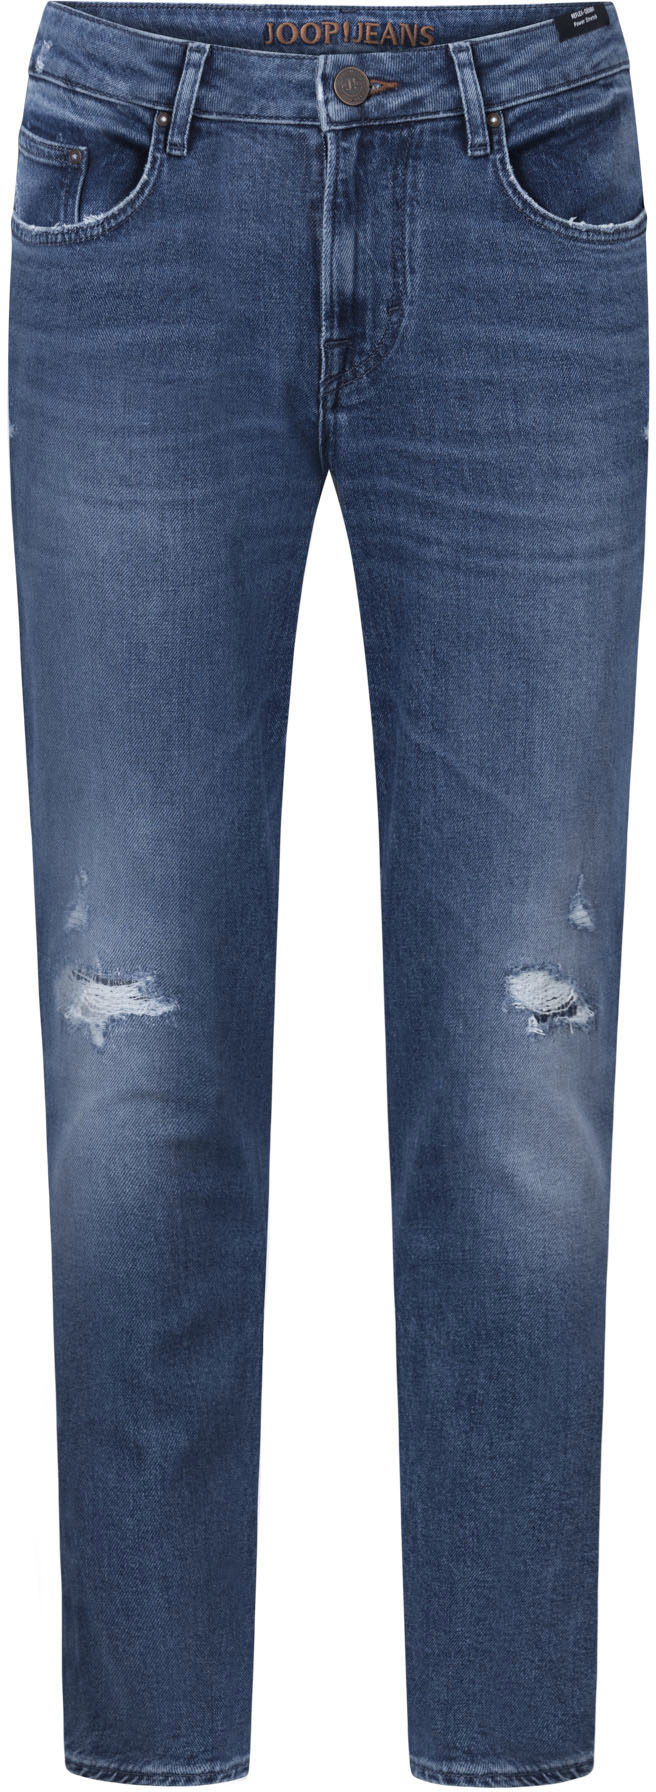 Joop Jeans Straight-Jeans, in 5-Pocket Form von Joop Jeans